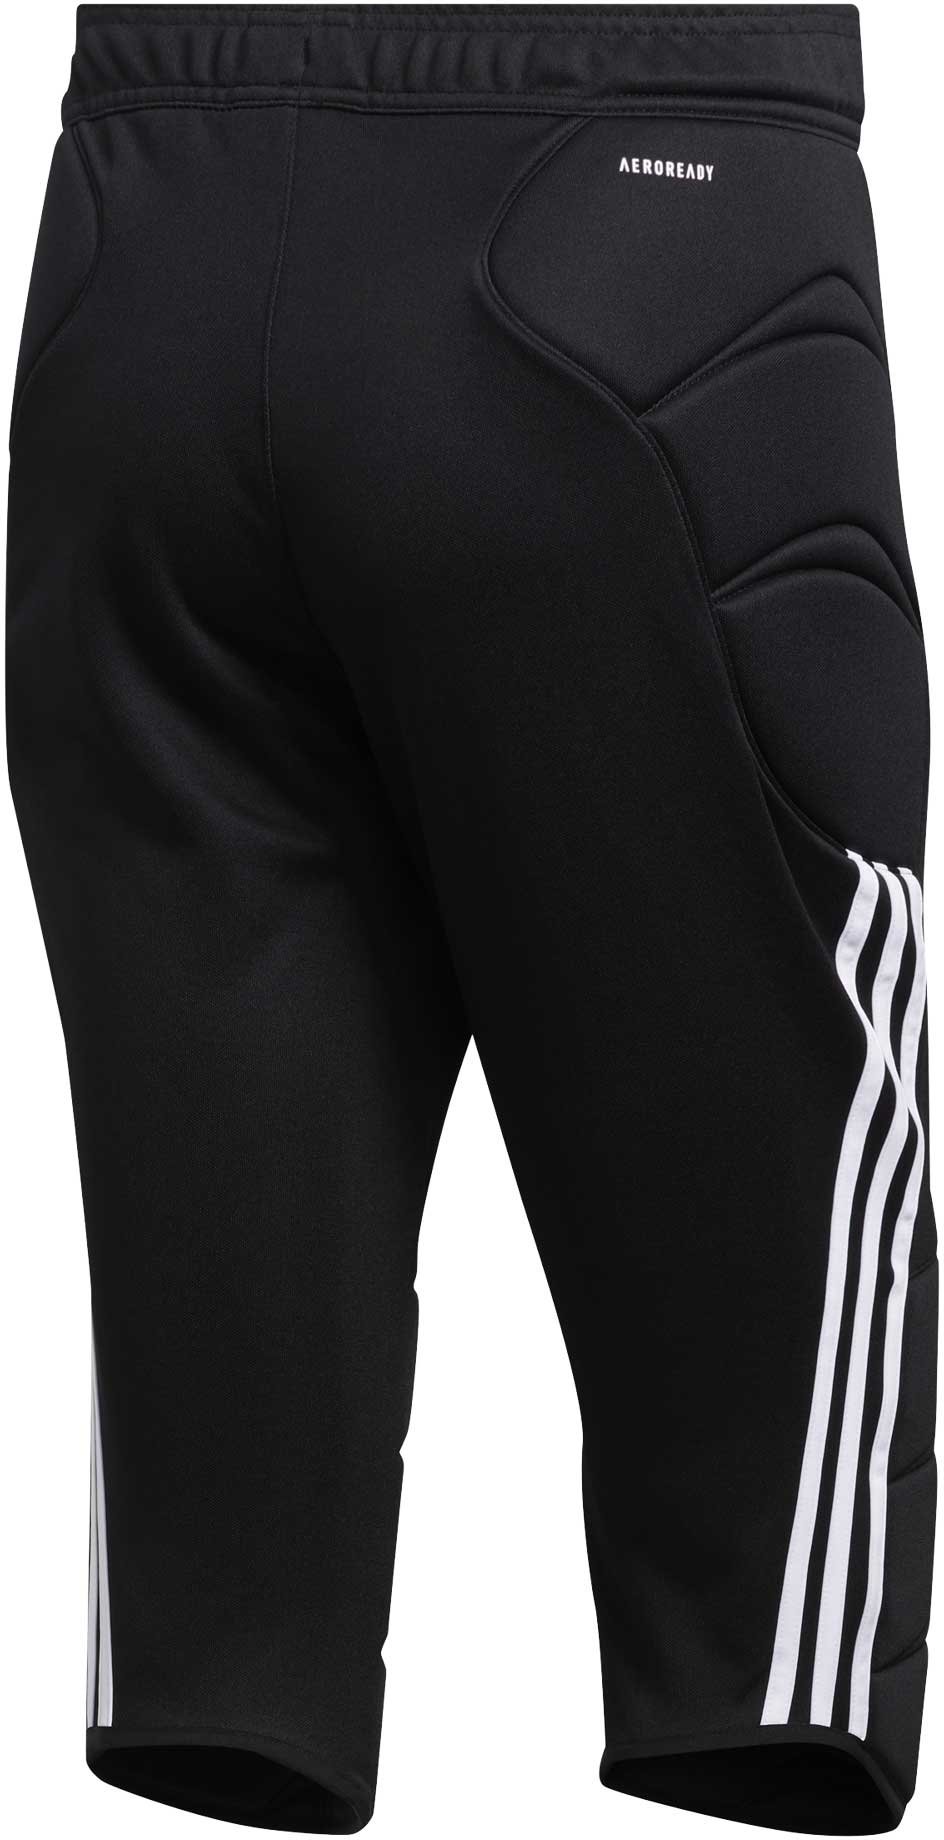 Men’s 3/4 length goalkeeper pants